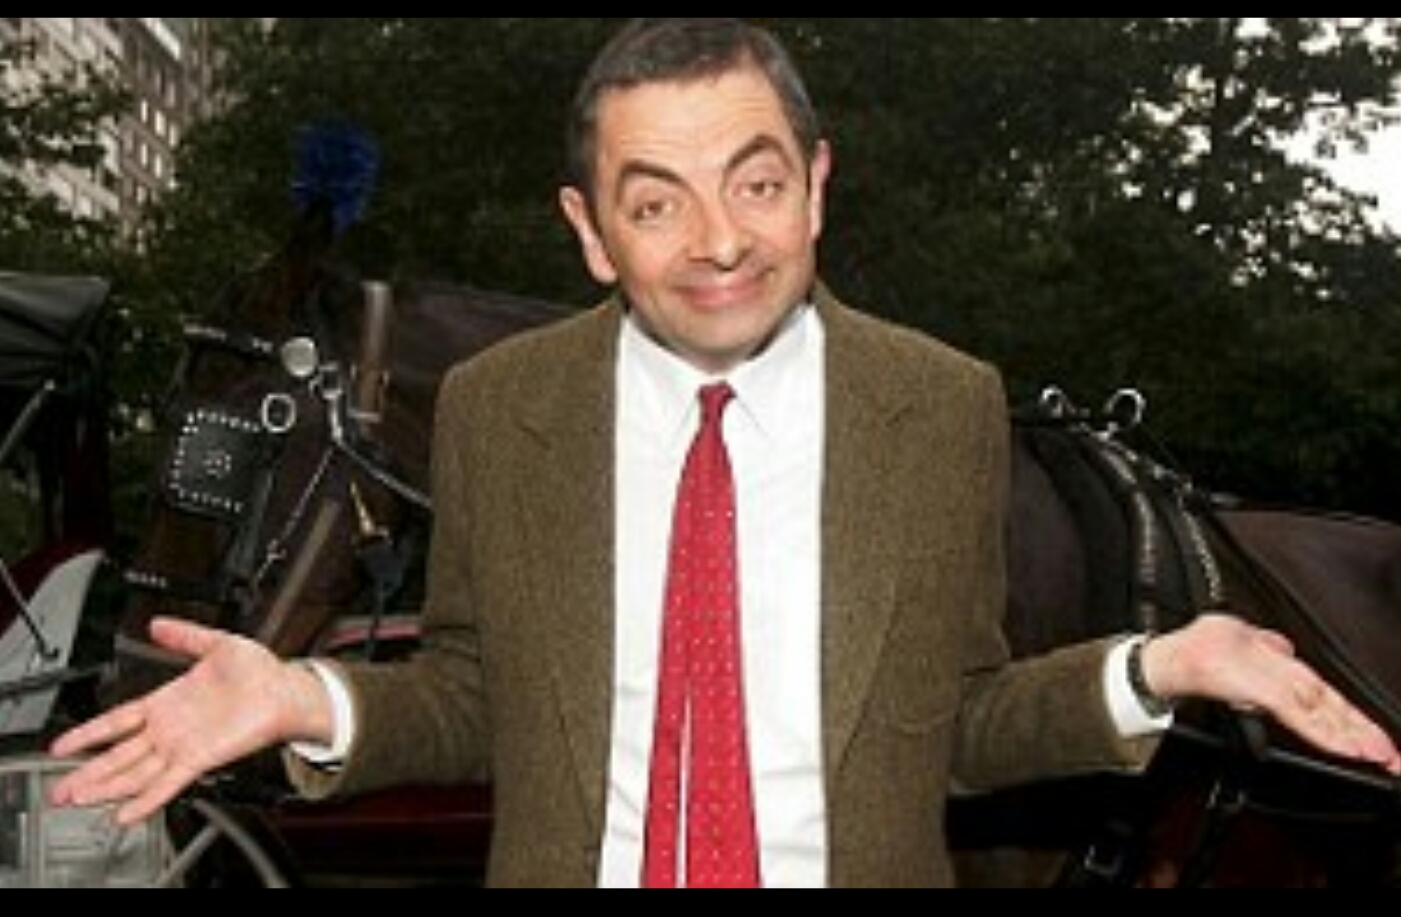 Rowan Atkinson (Mr Bean) dead in car crash? TrueOrFalse online